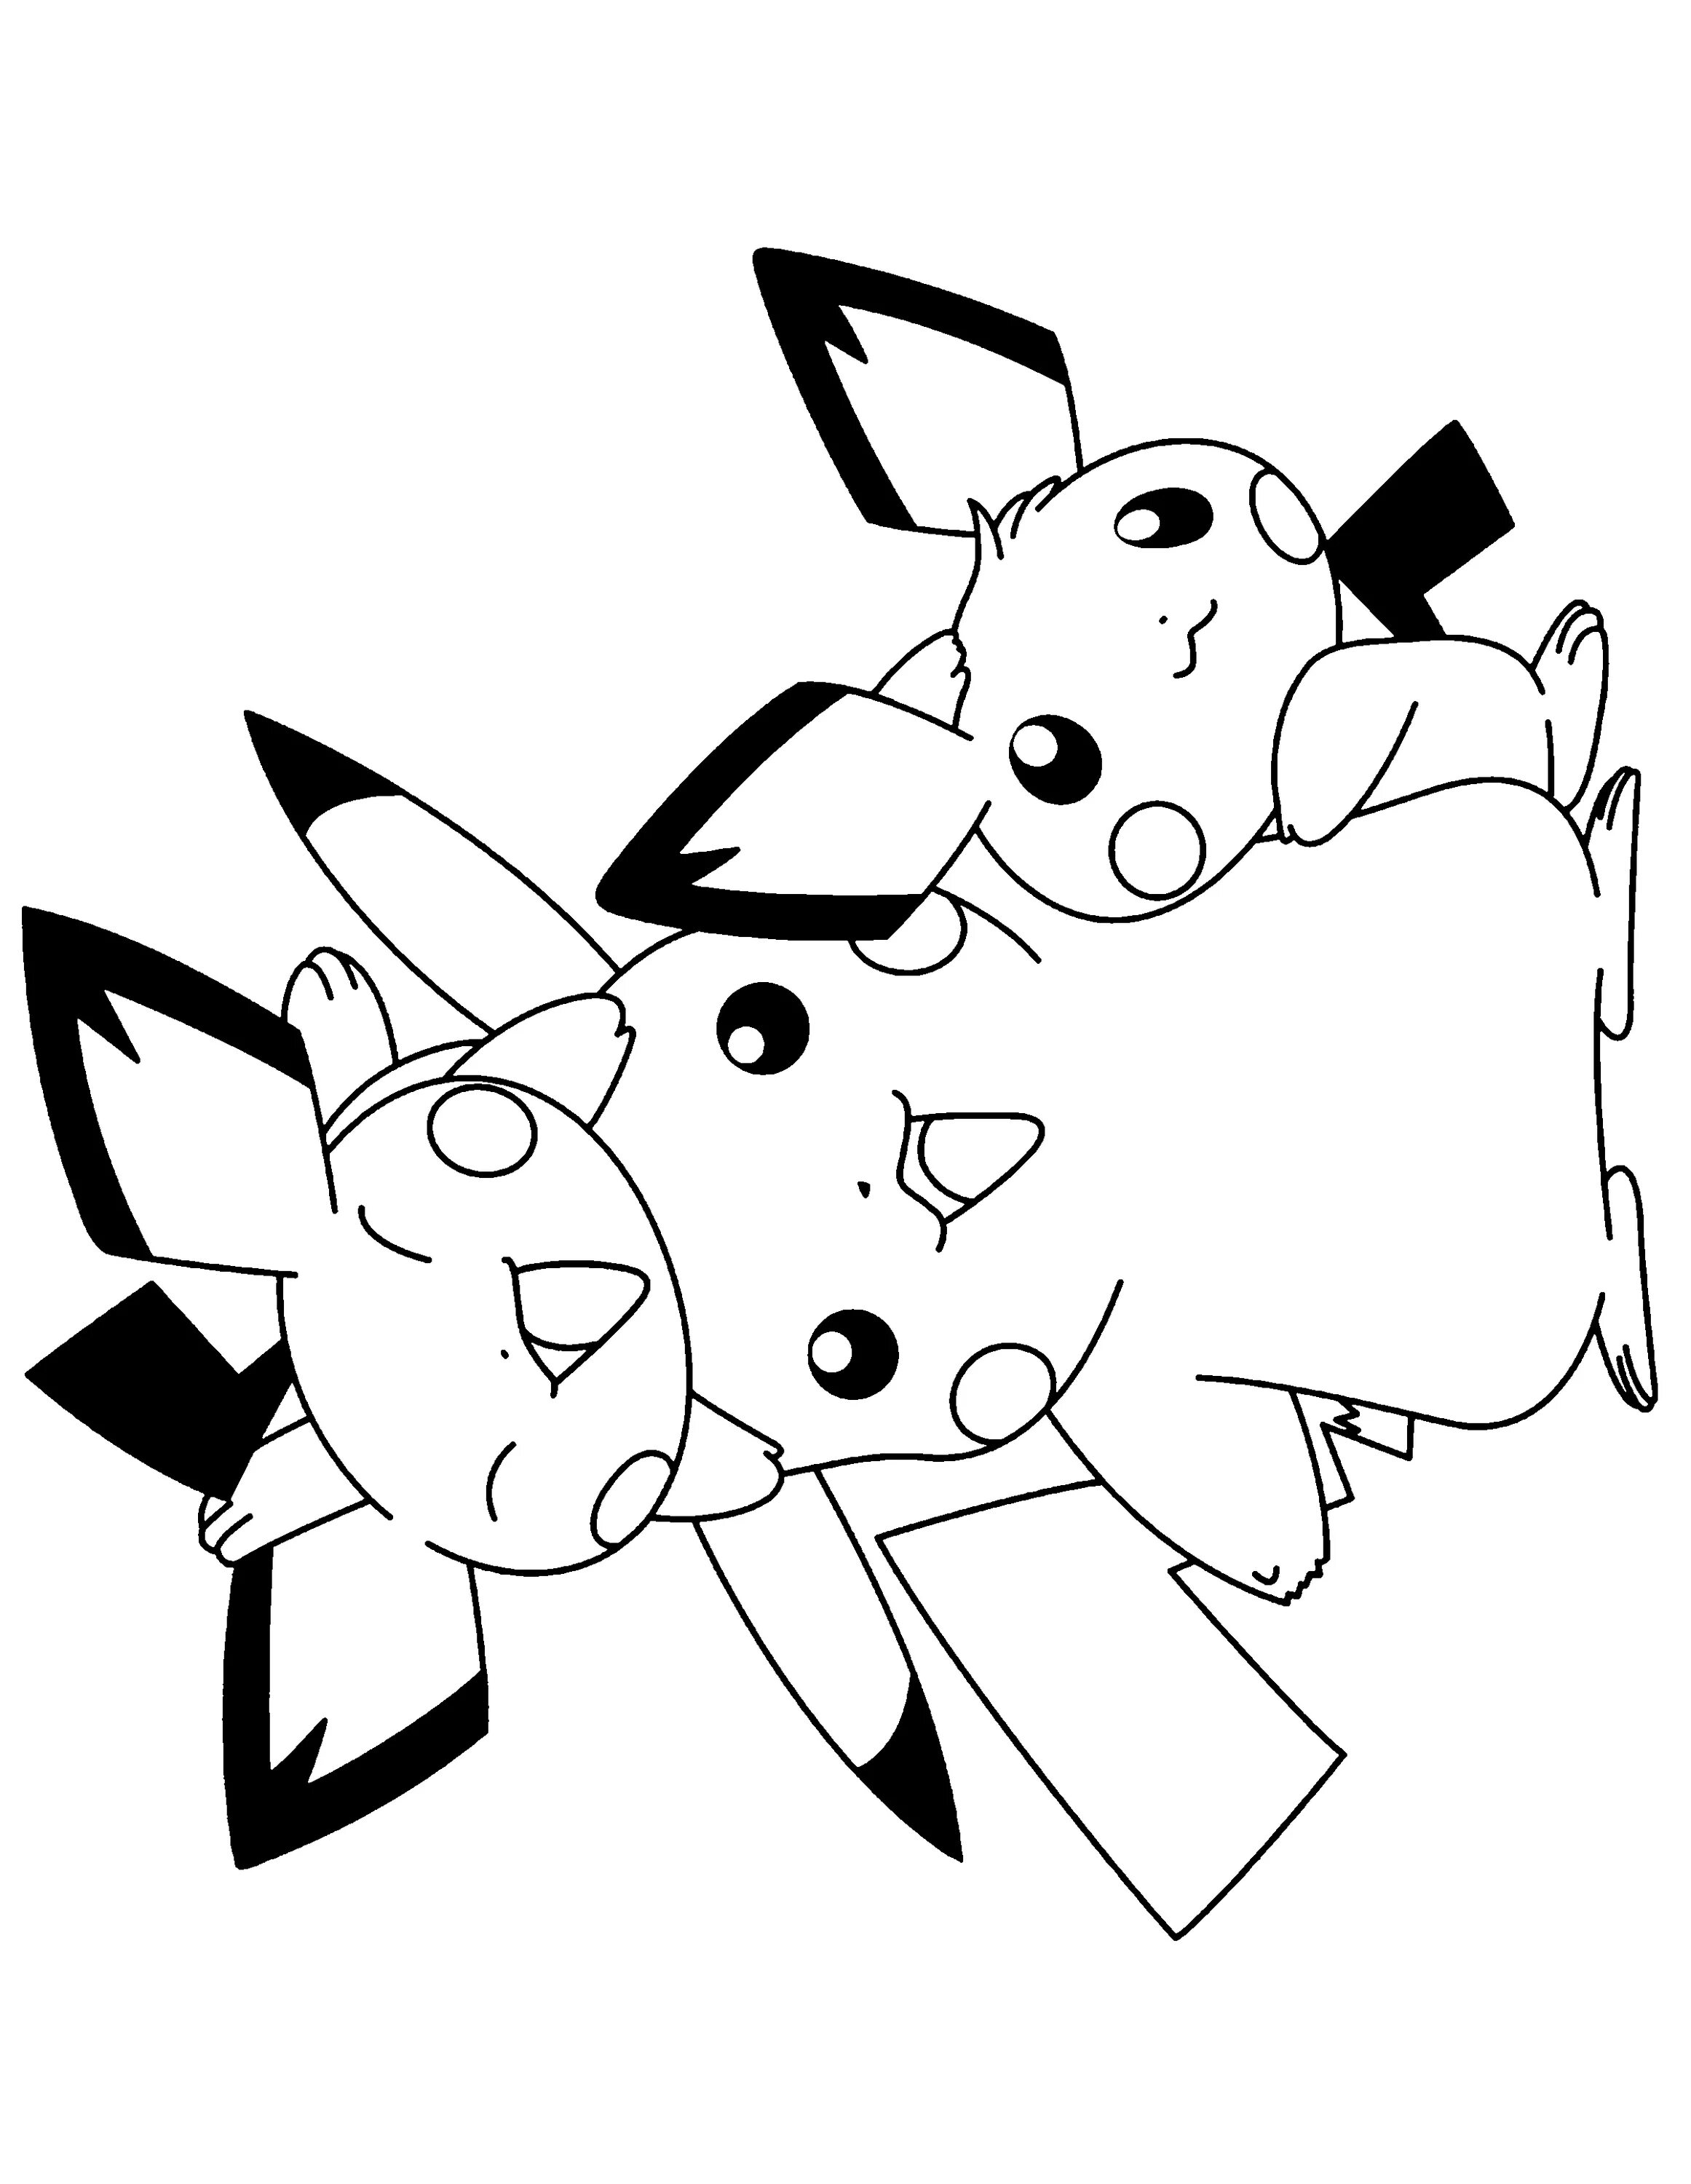 Invitation pikachu coloring book